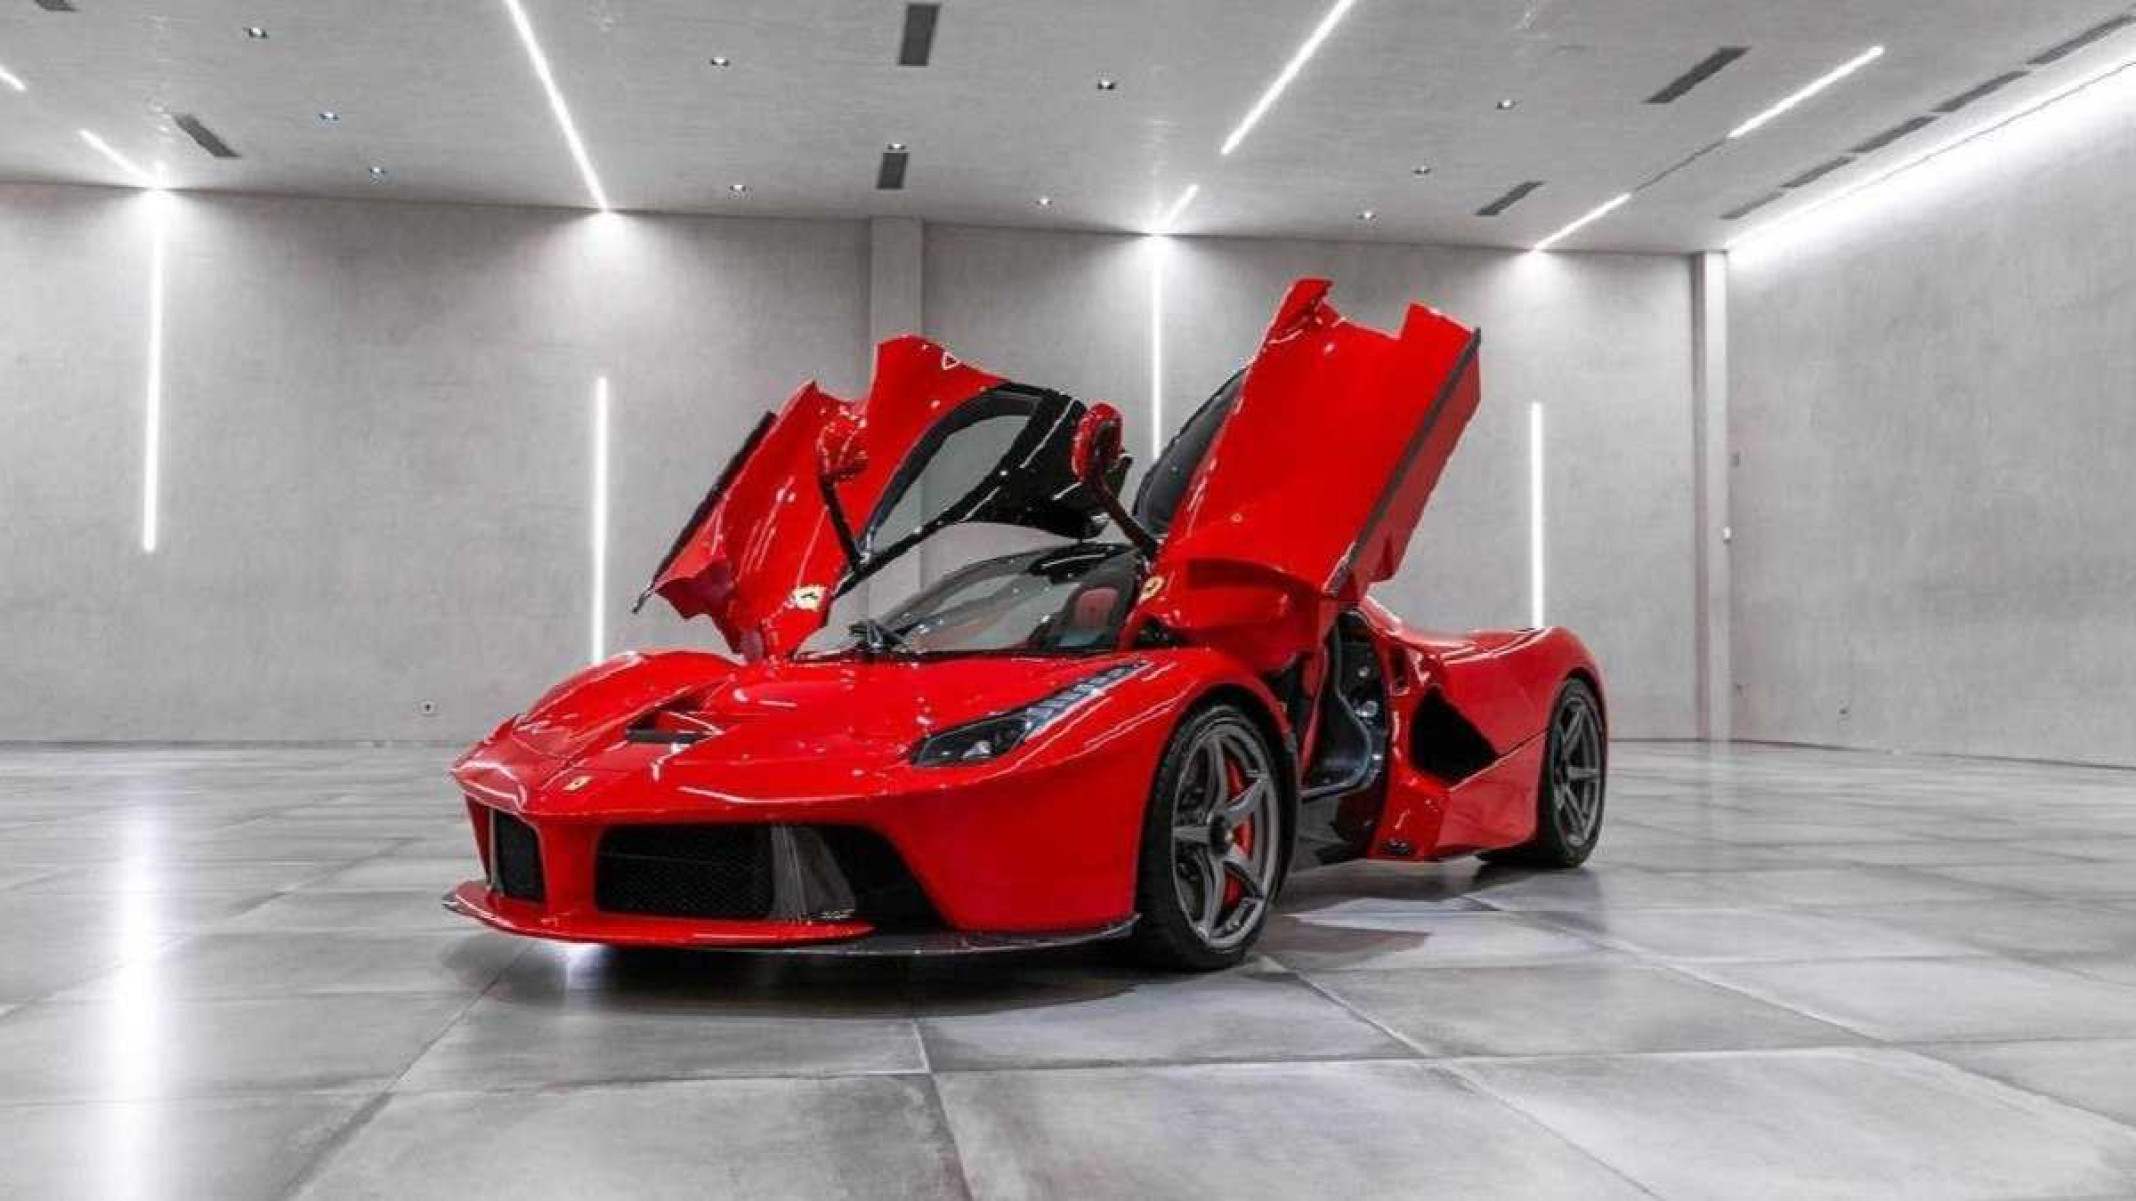 Frente estática da Ferrari LaFerrari vermelha em sala iluminada cinza